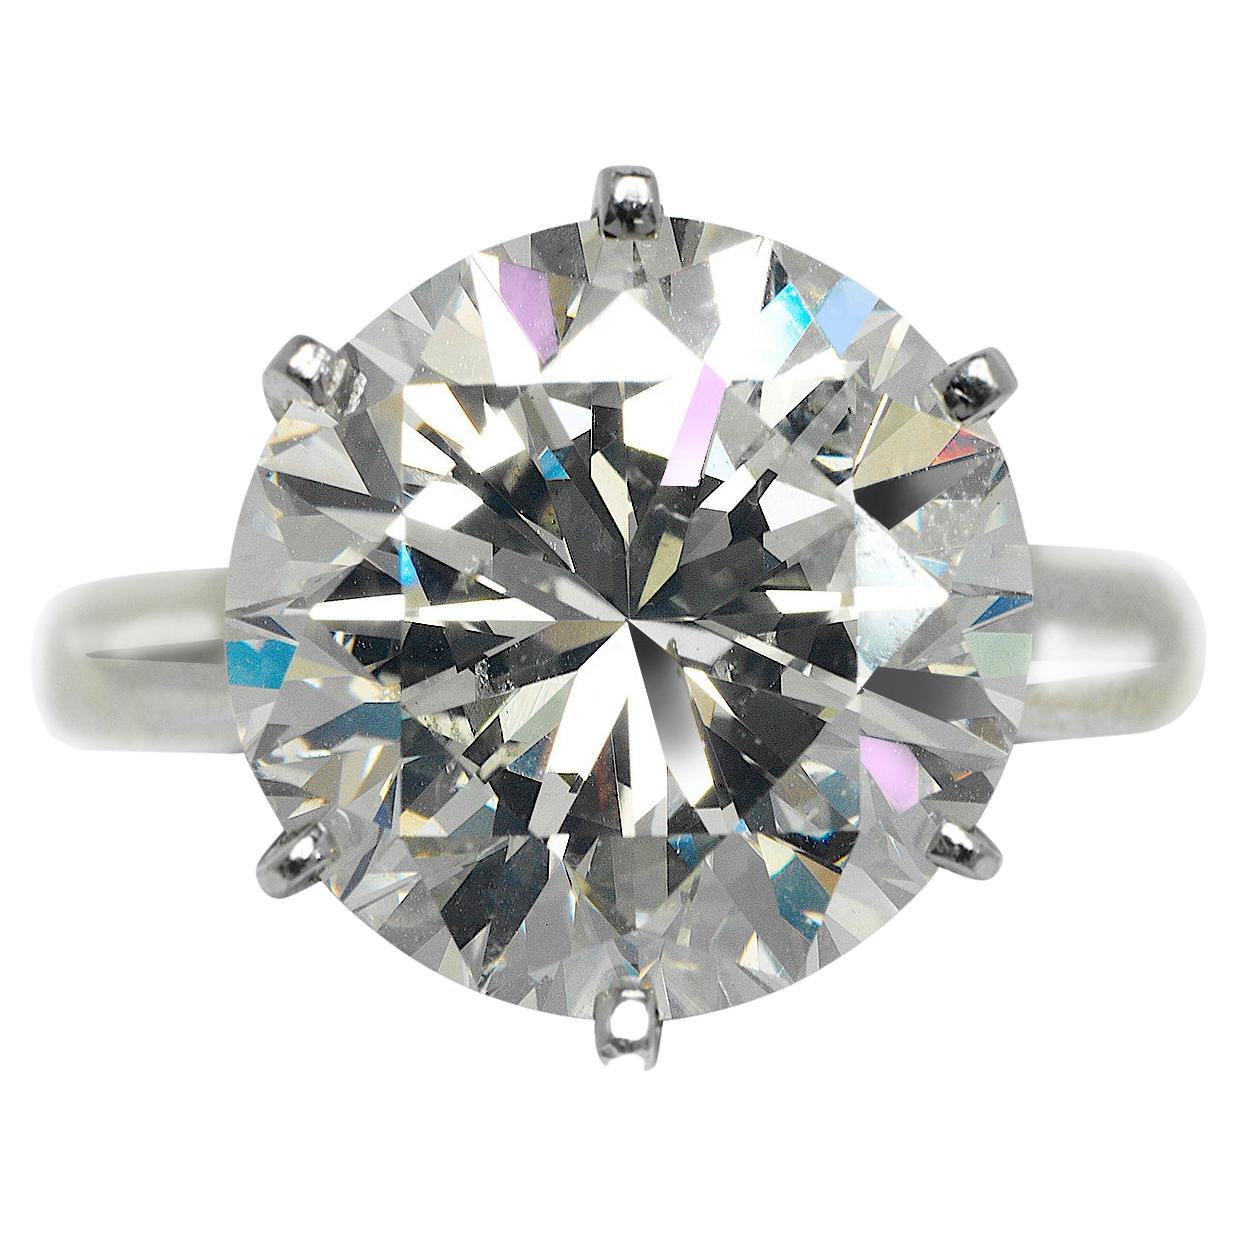 10 Carat Round Cut Diamond Engagement Ring Certified I VS2